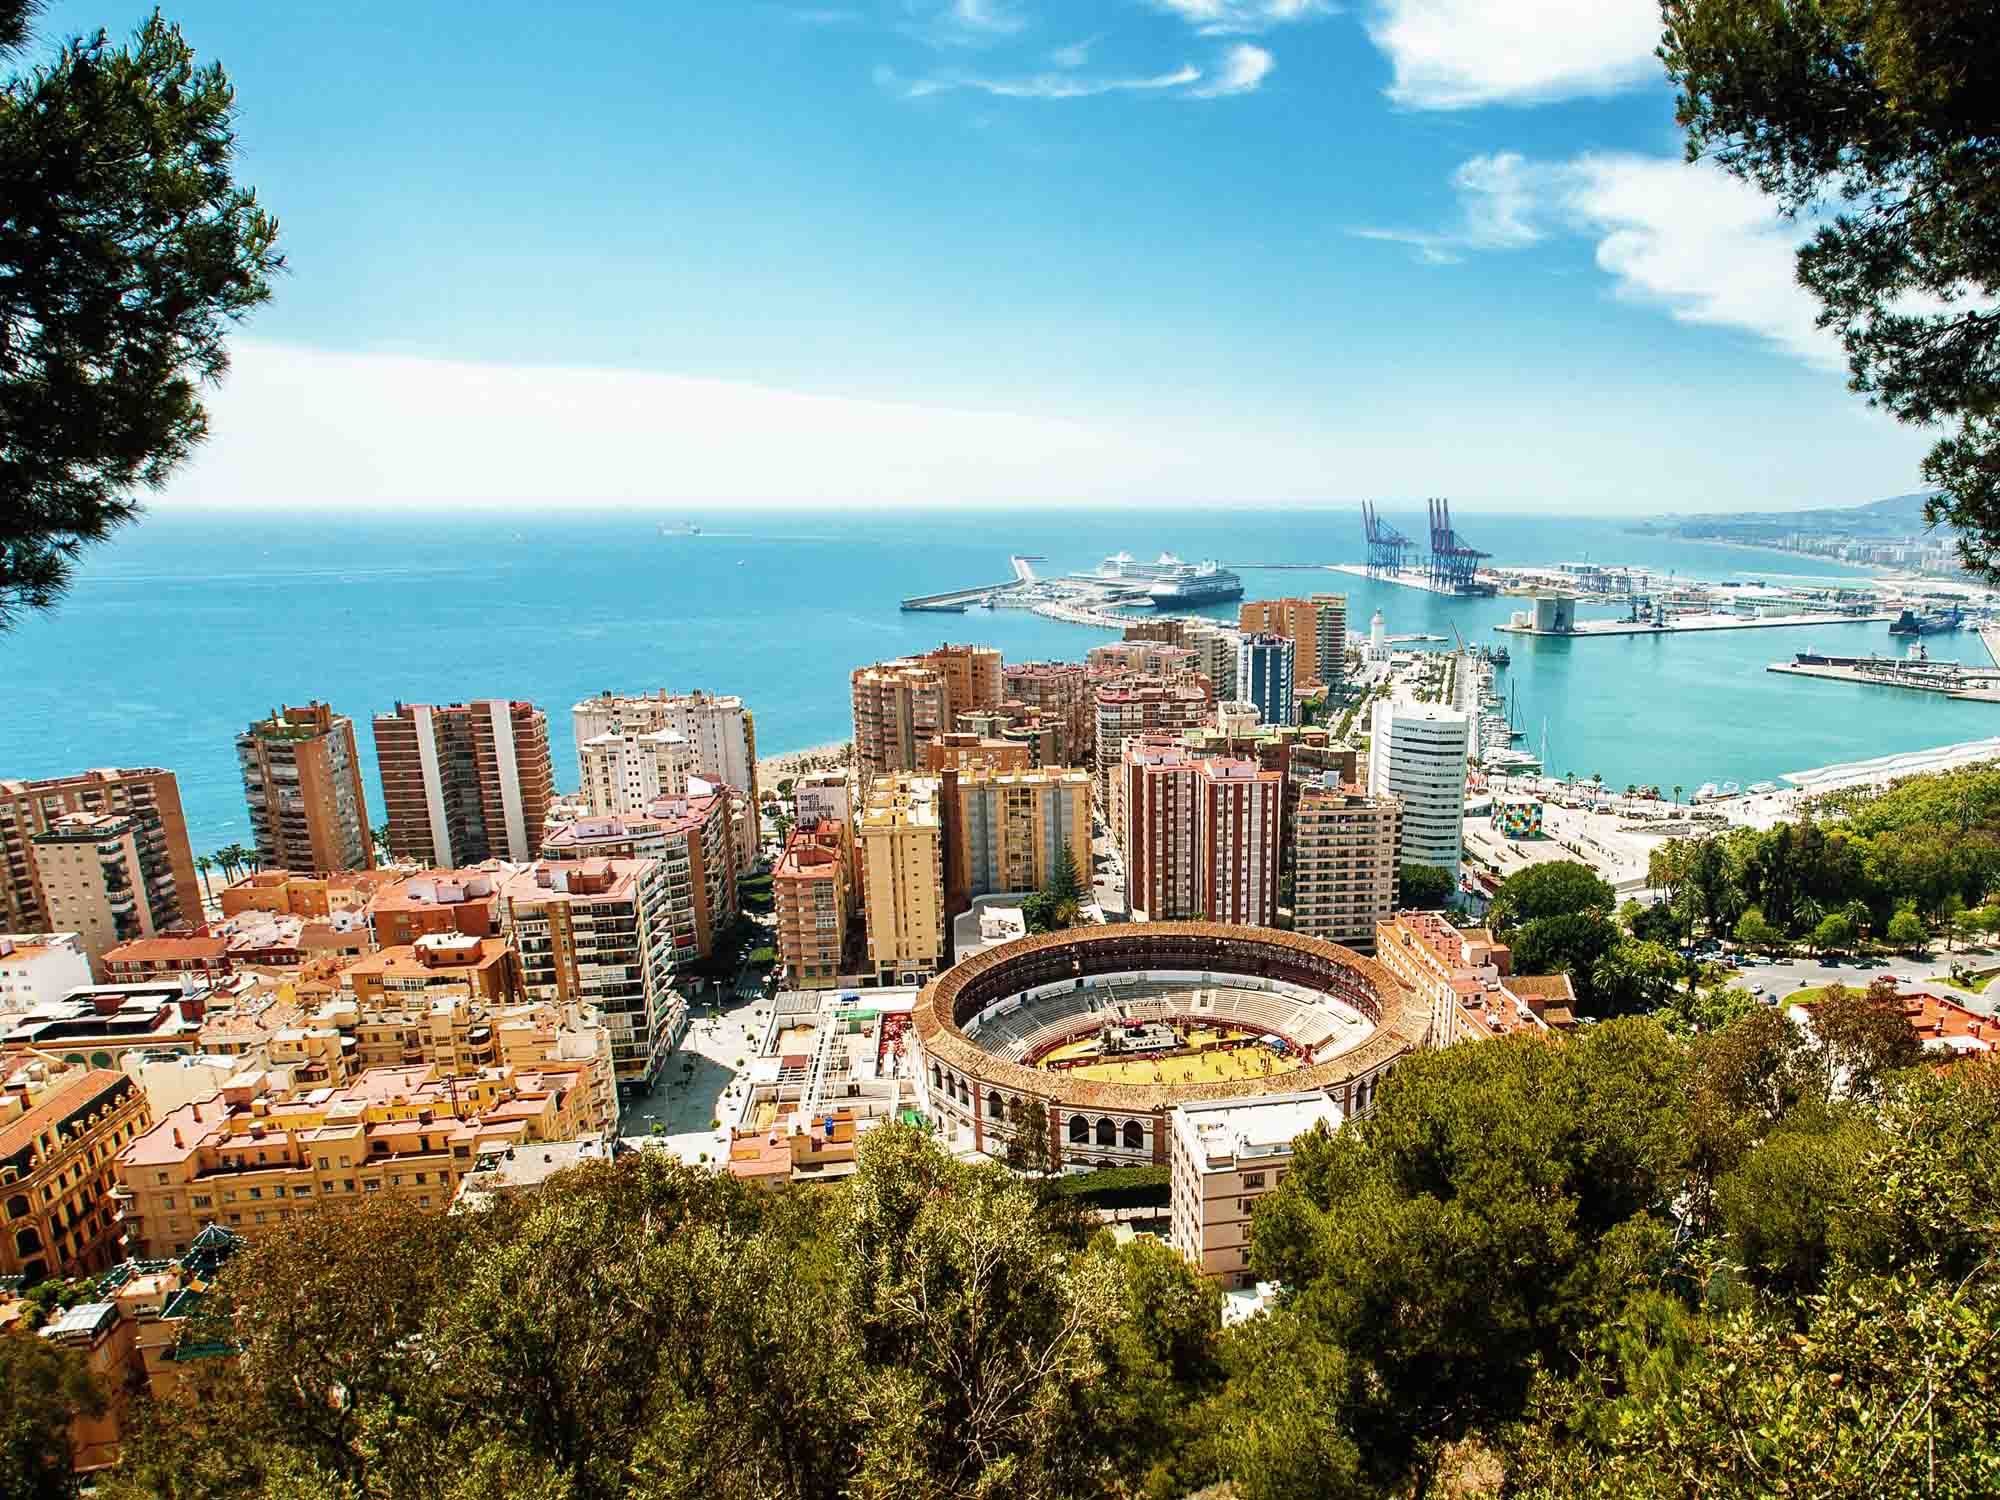 Where can I play Bubble Football in Spain - Malaga